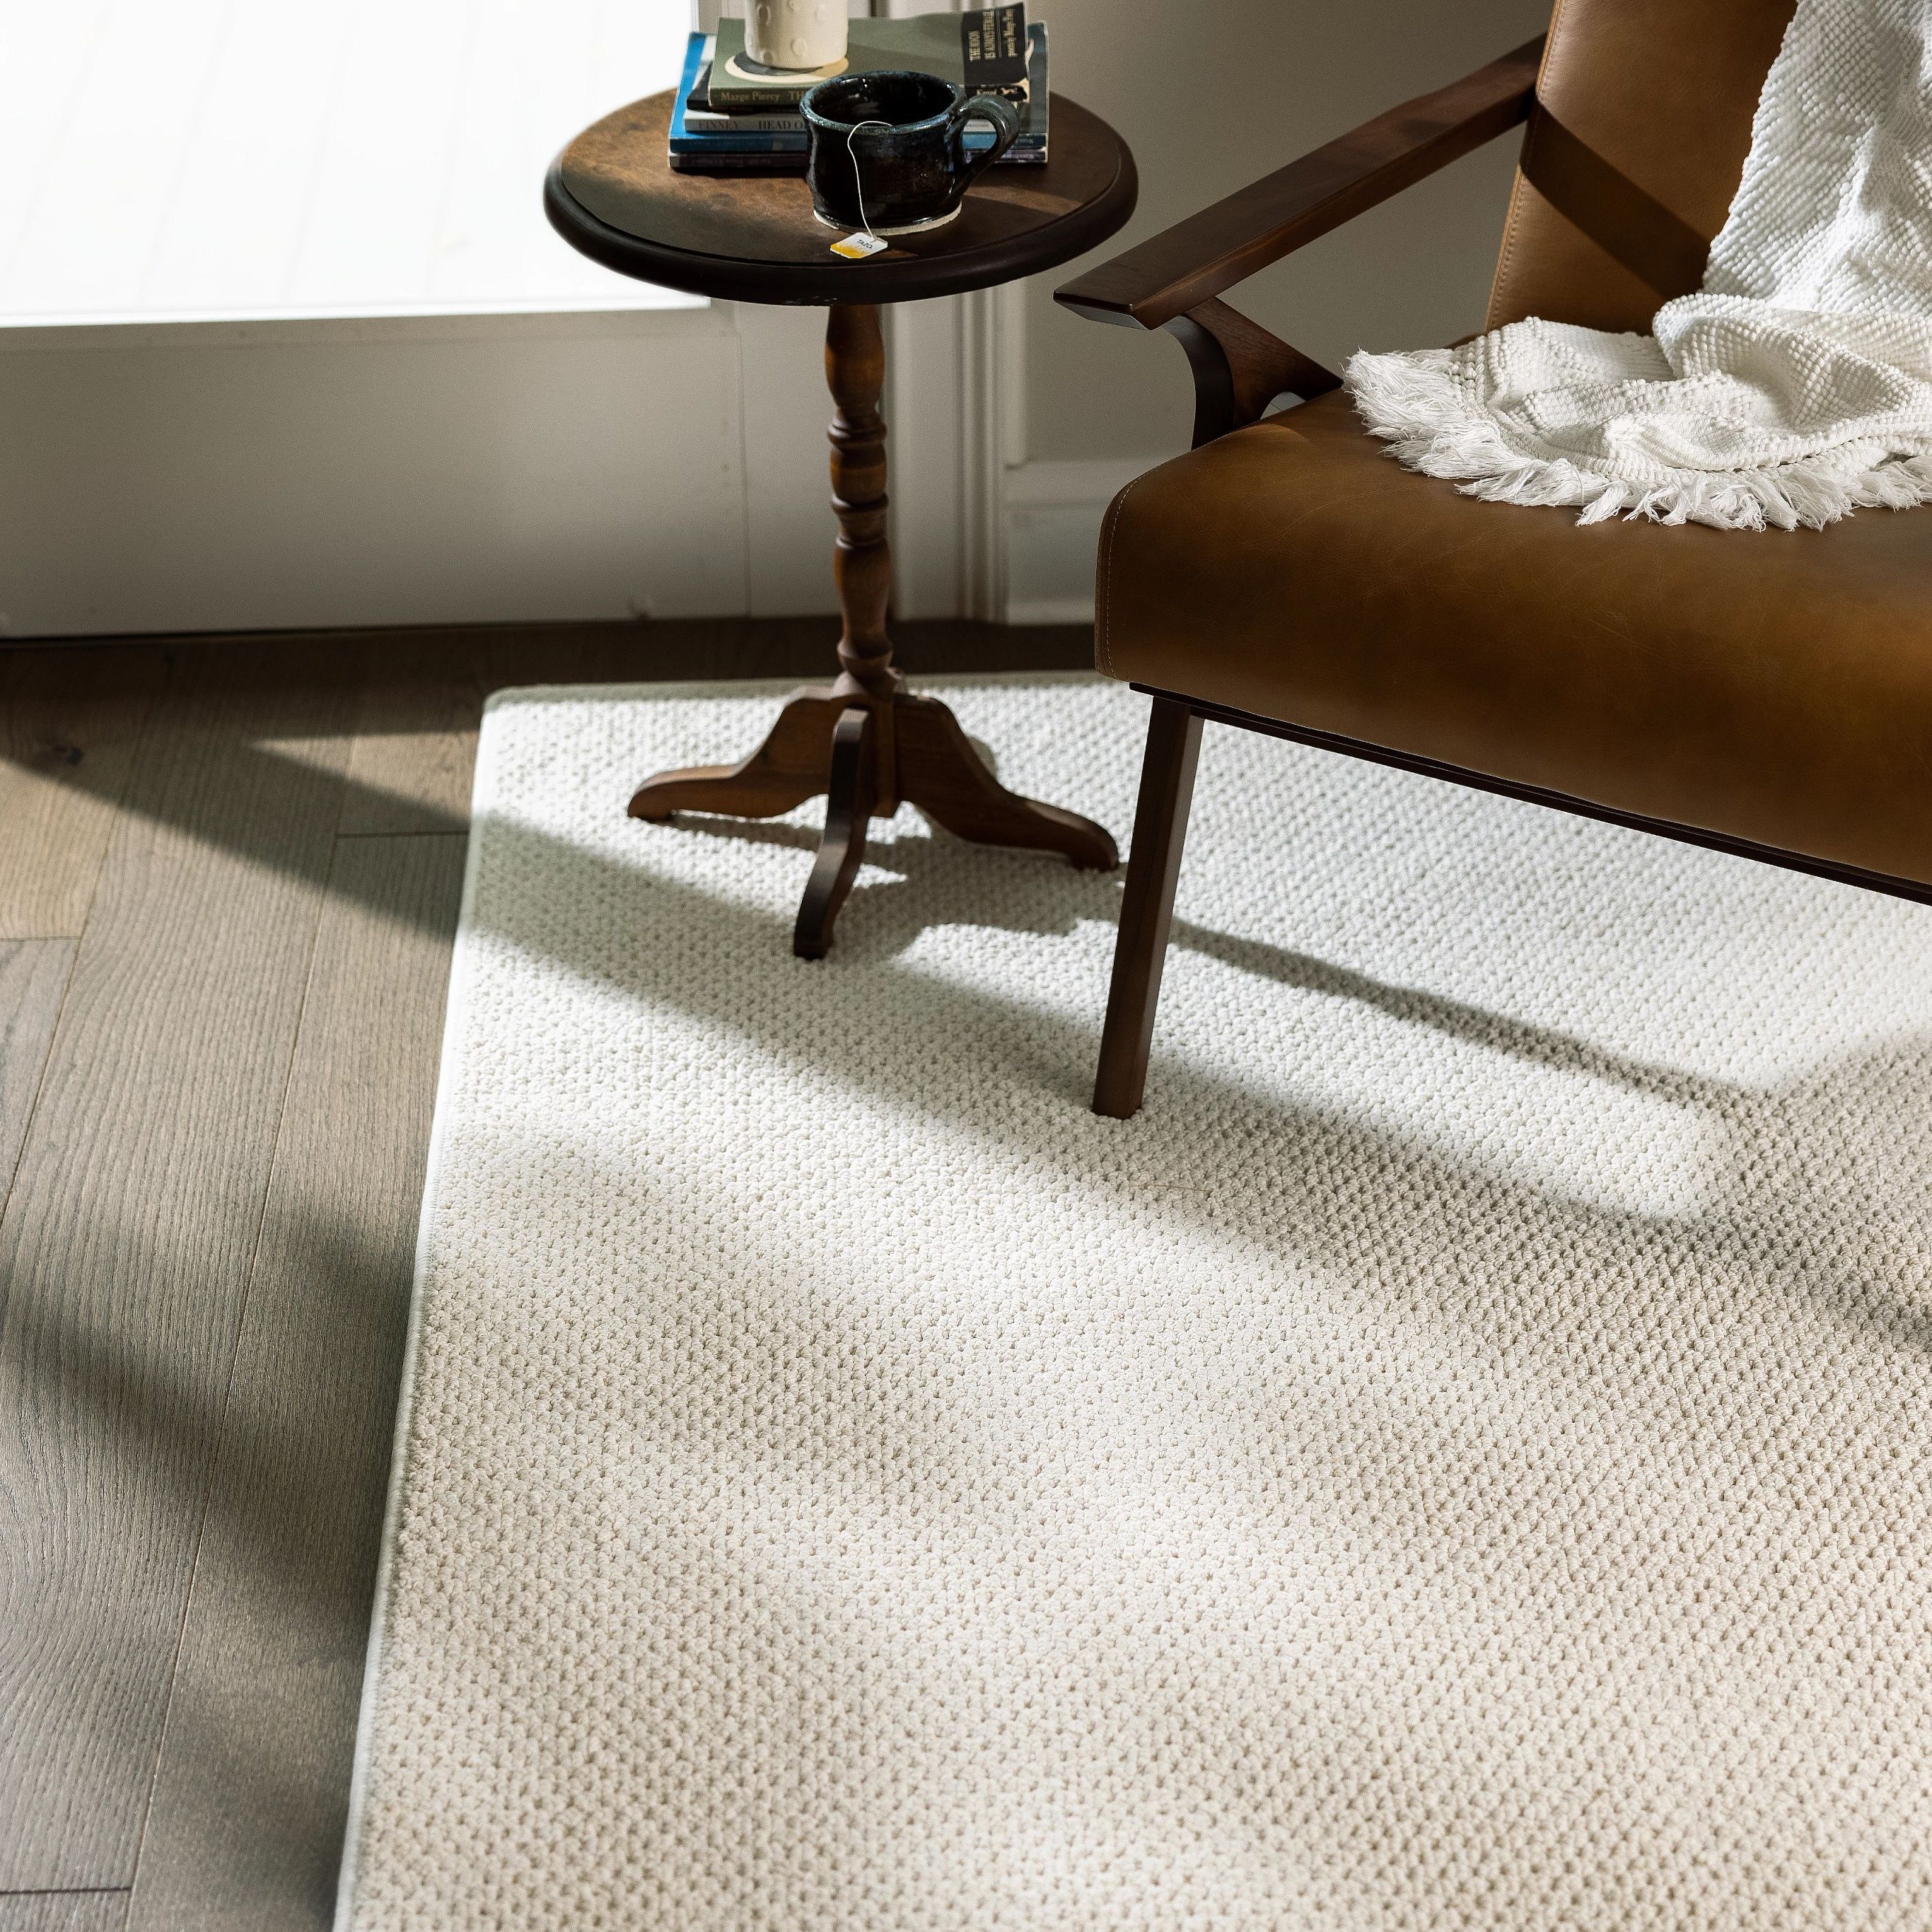 White rug on hardwood flooring - Carpet binding services from Matson Rugs, Inc in Berlin, CT